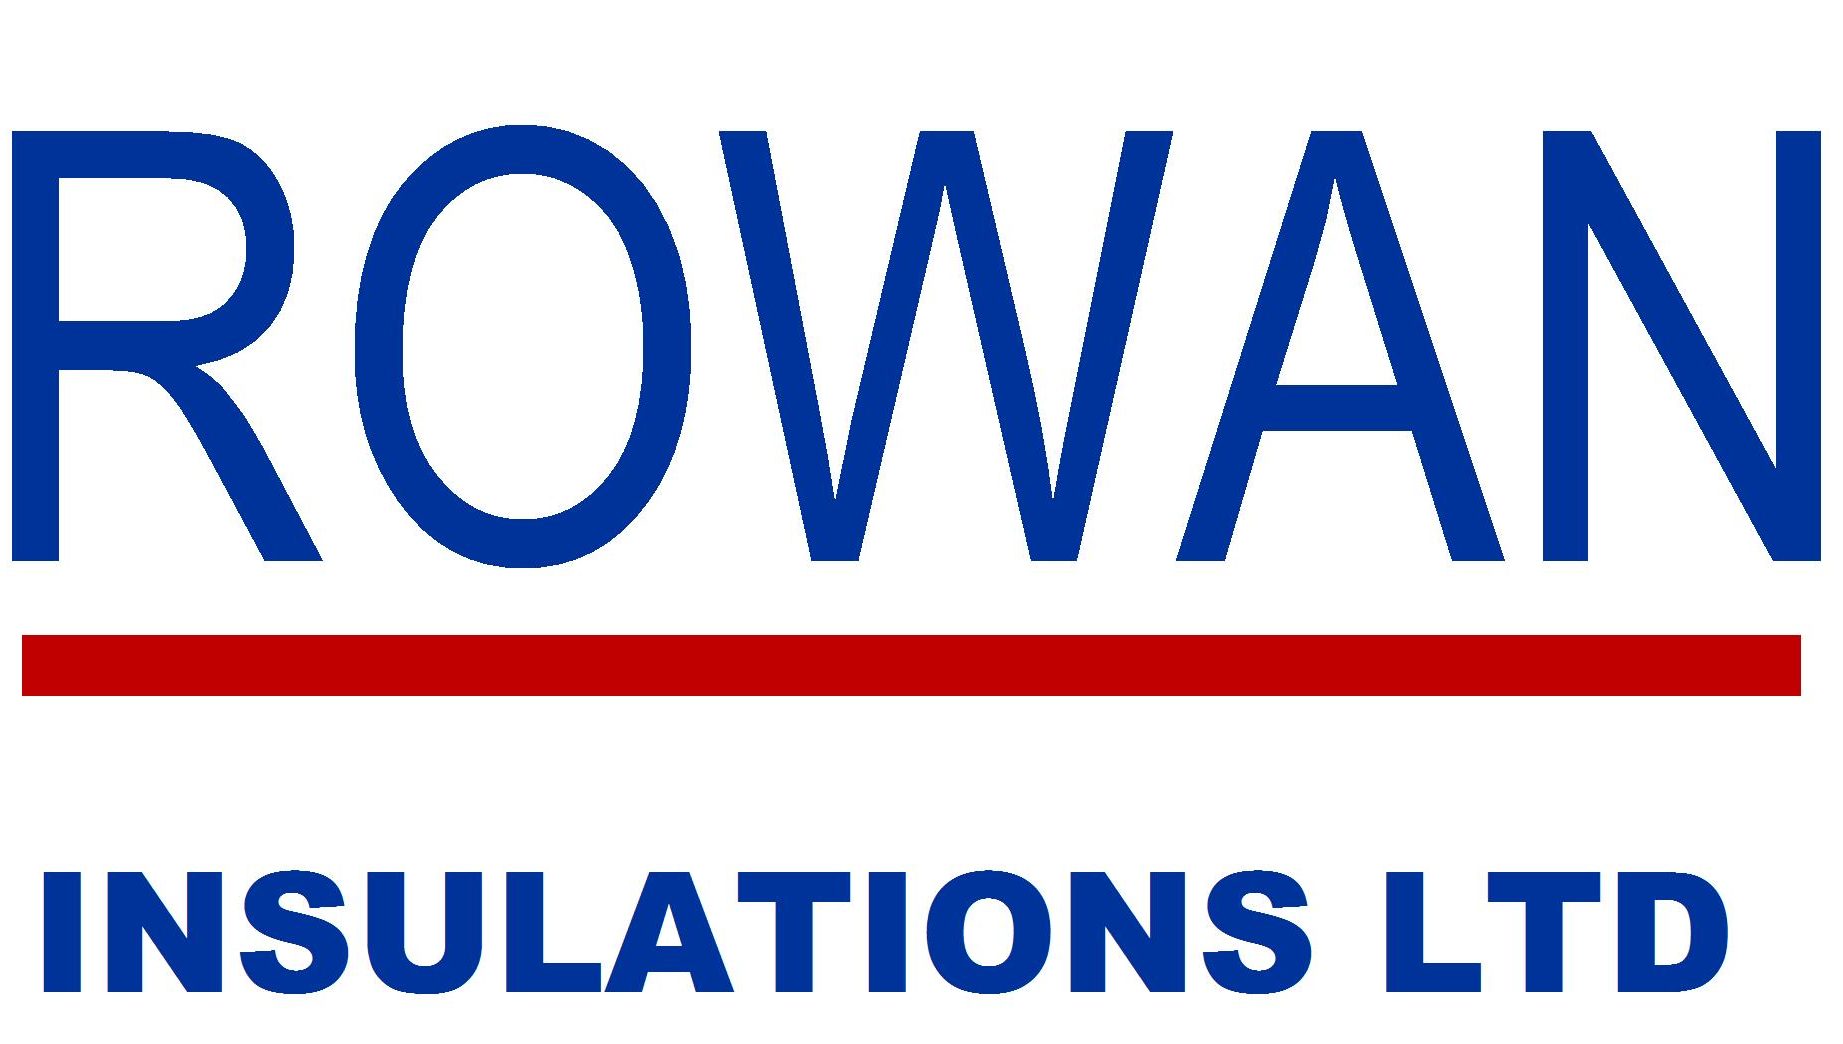 Rowan Insulations Ltd